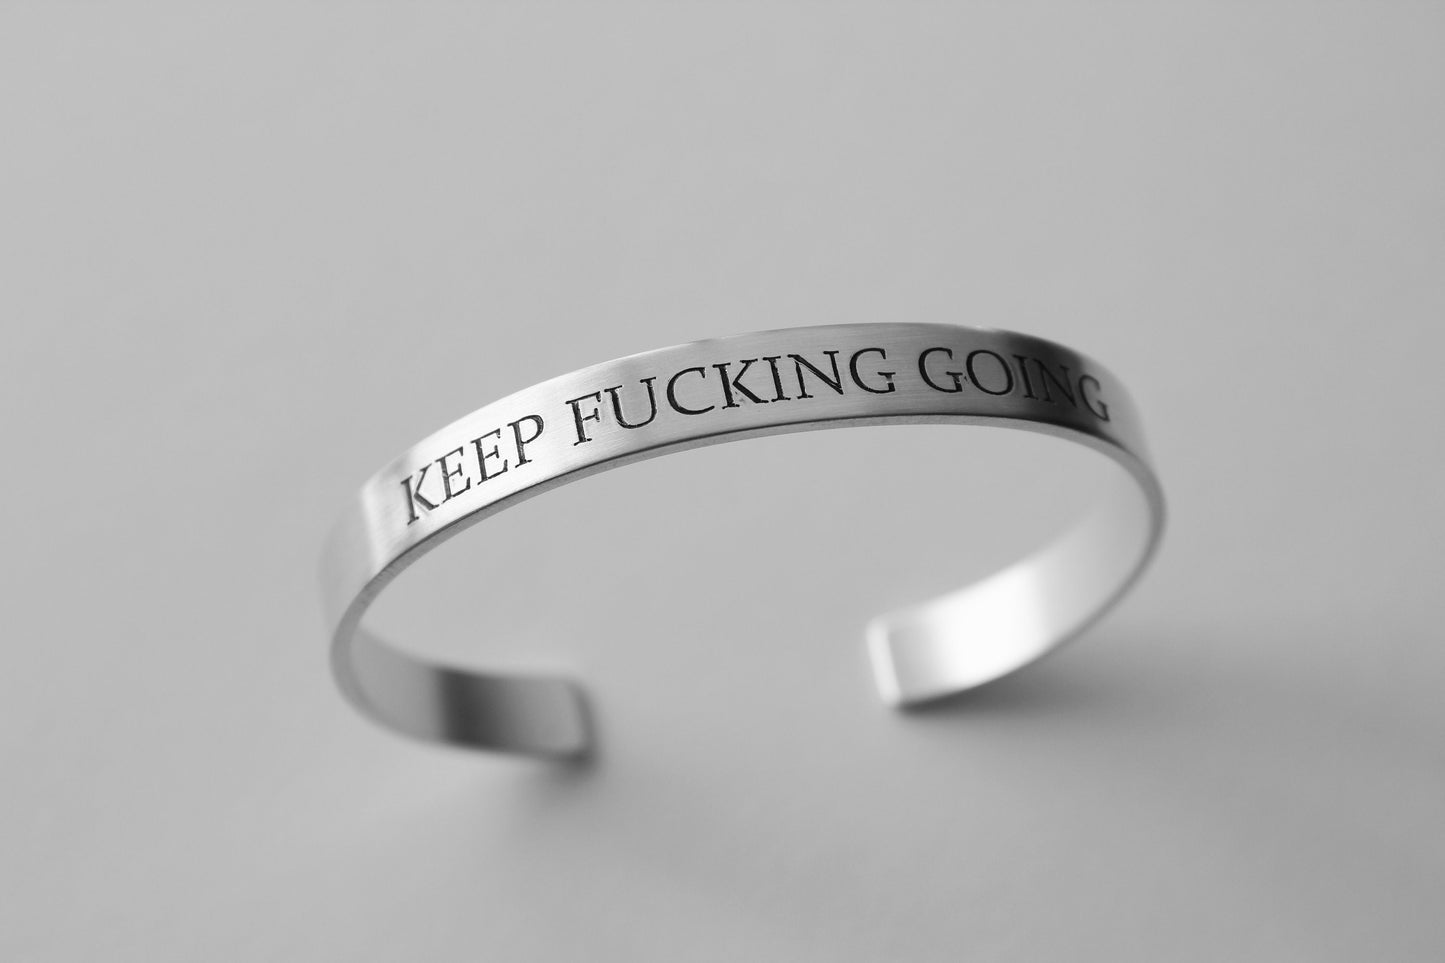 Keep Fucking Going, Keep Fucking Going Cuff, Inspirational Bracelet Cuff, Motivational Jewelry, Personalized Cuff Bracelet, Friend Bracelet